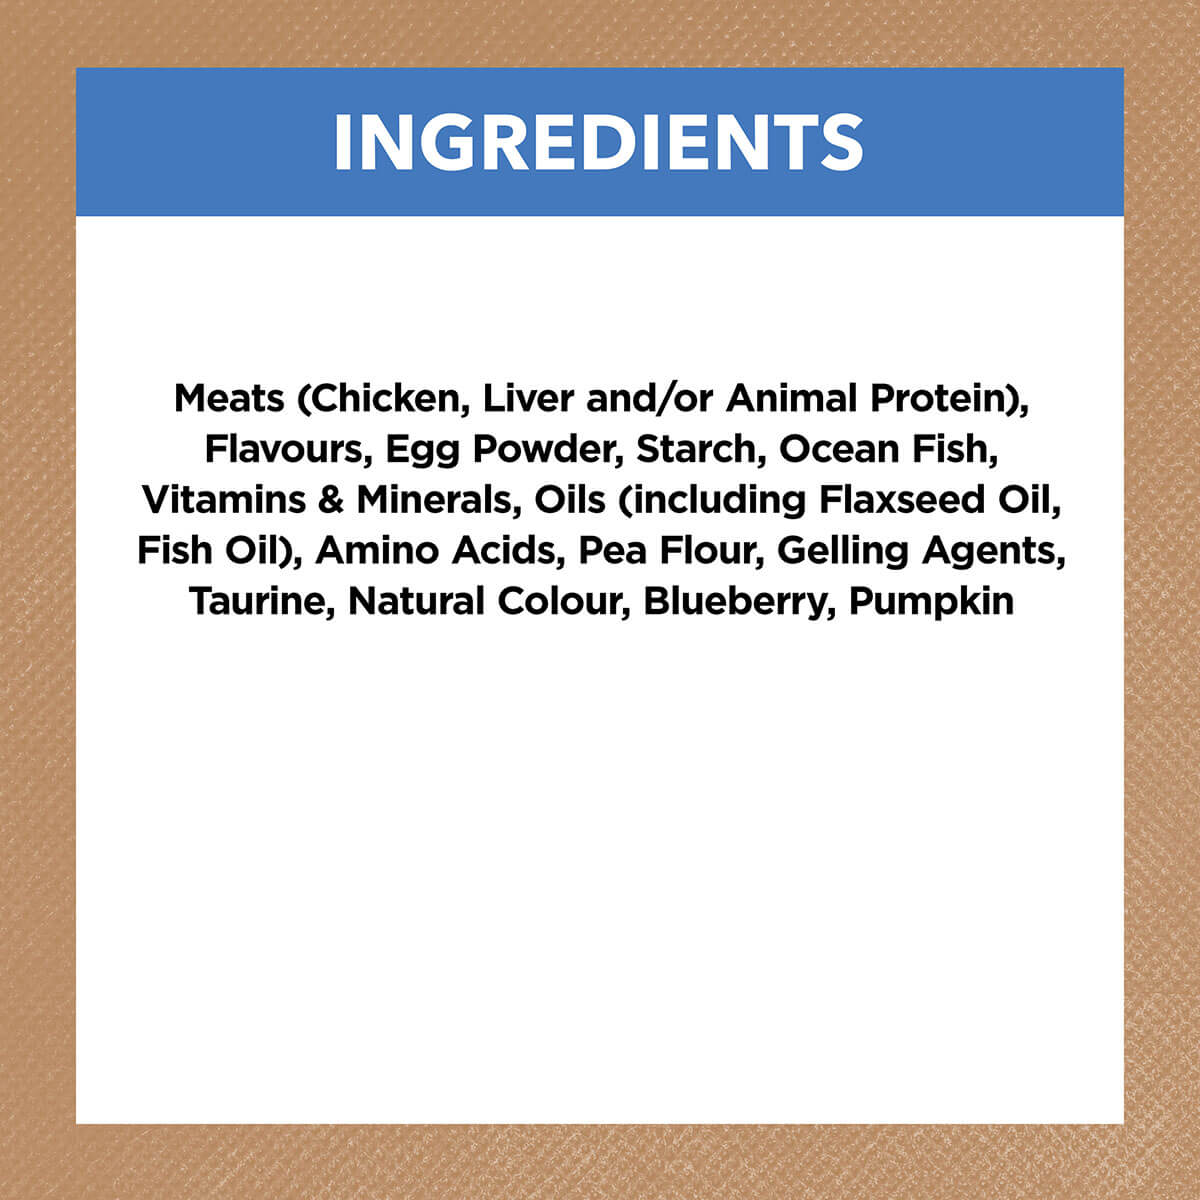 Ivory Coat Grain Free Adult Wet Cat Food Chicken & Ocean Fish in Jelly 85g